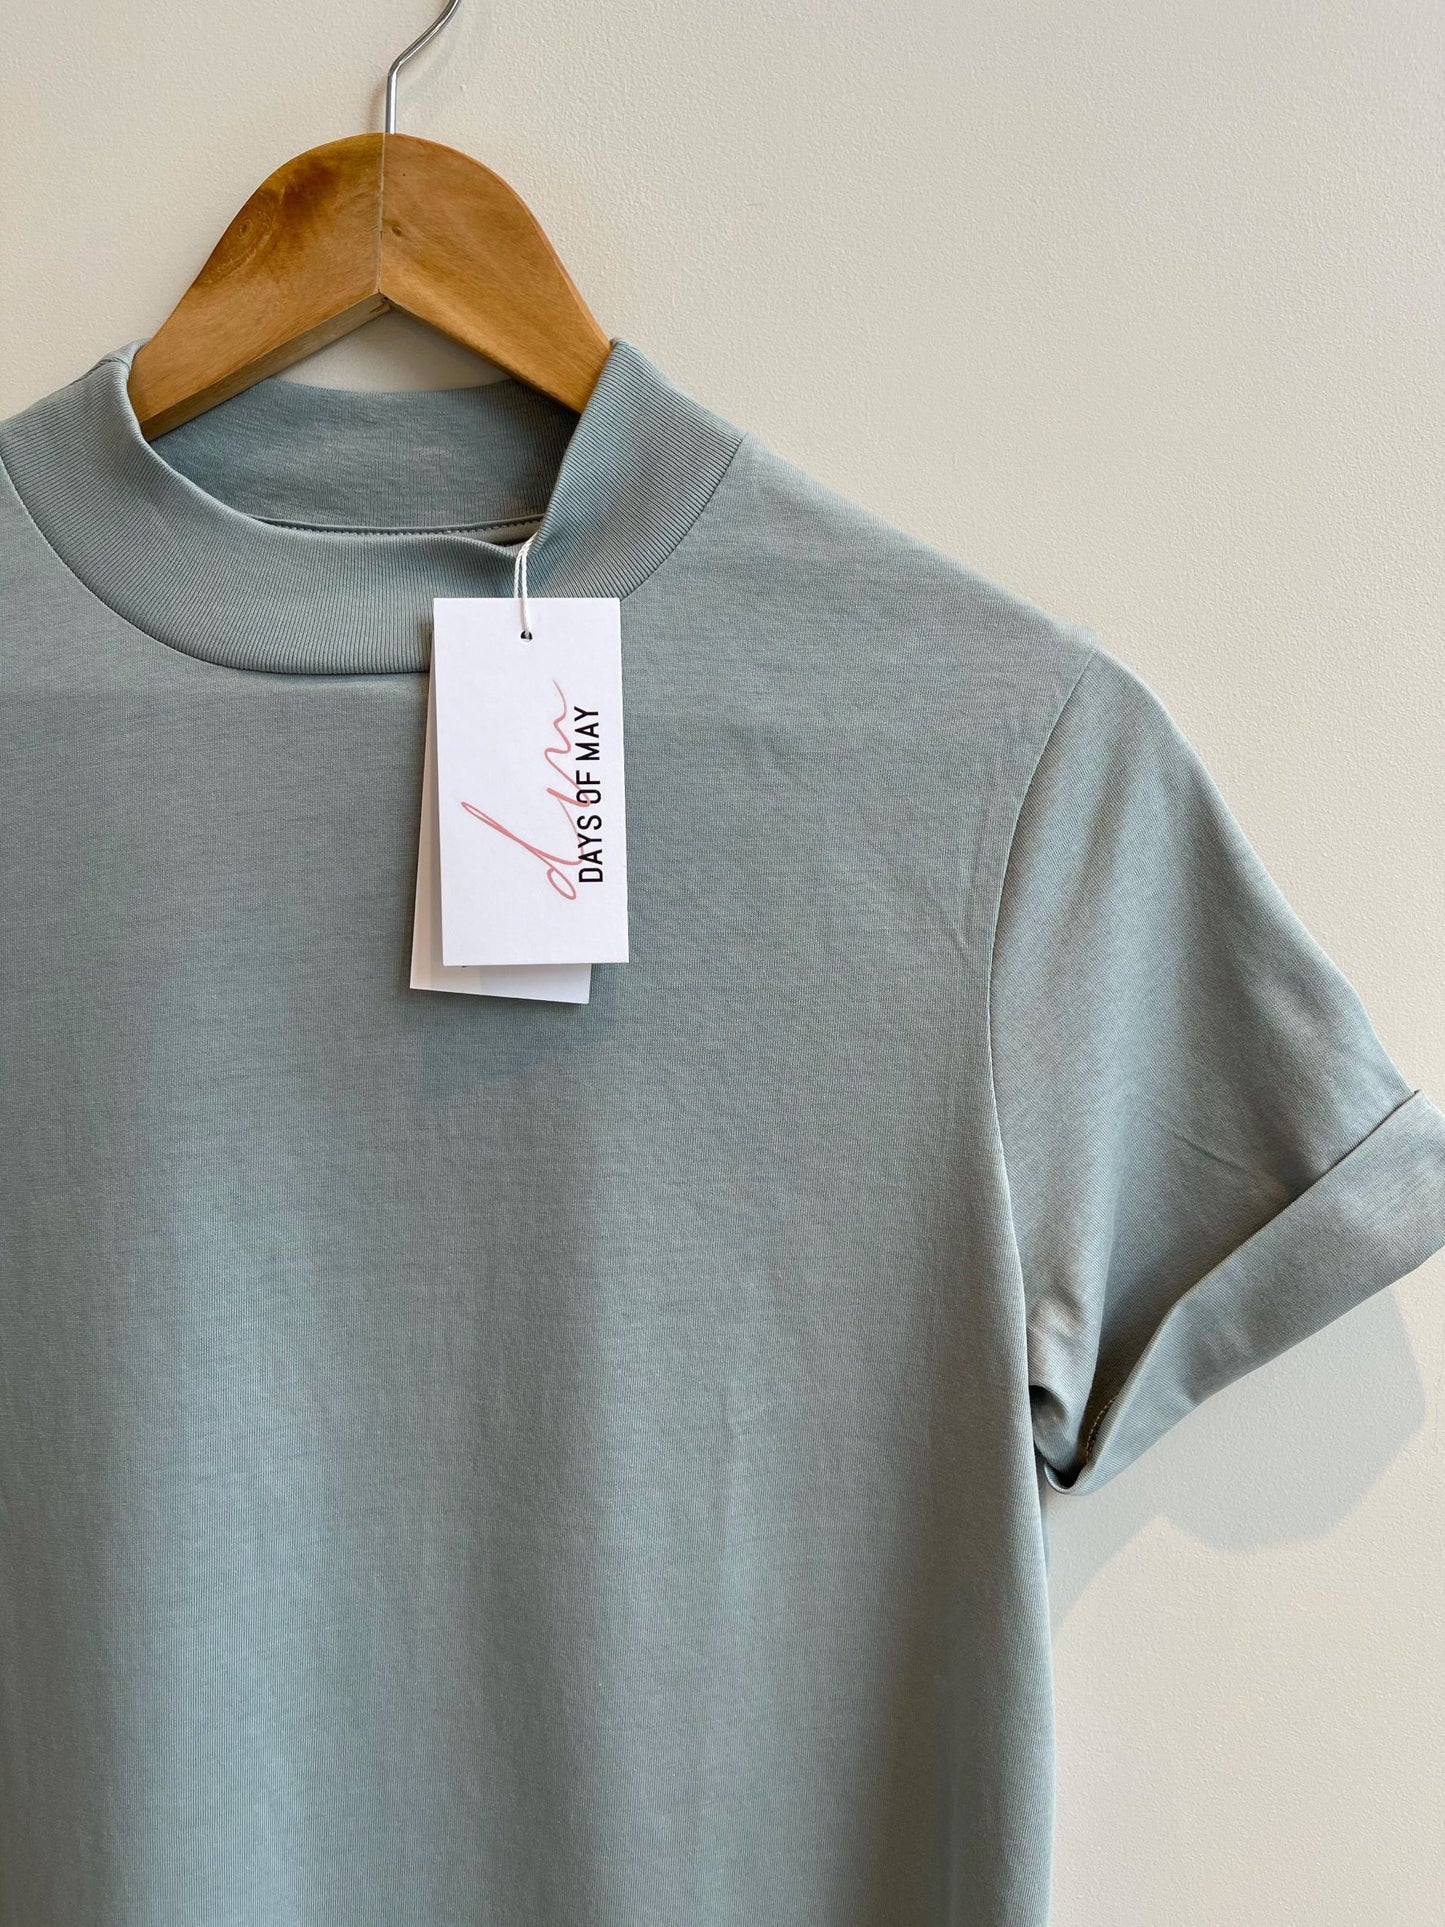 organic cotton tee shirt in grey